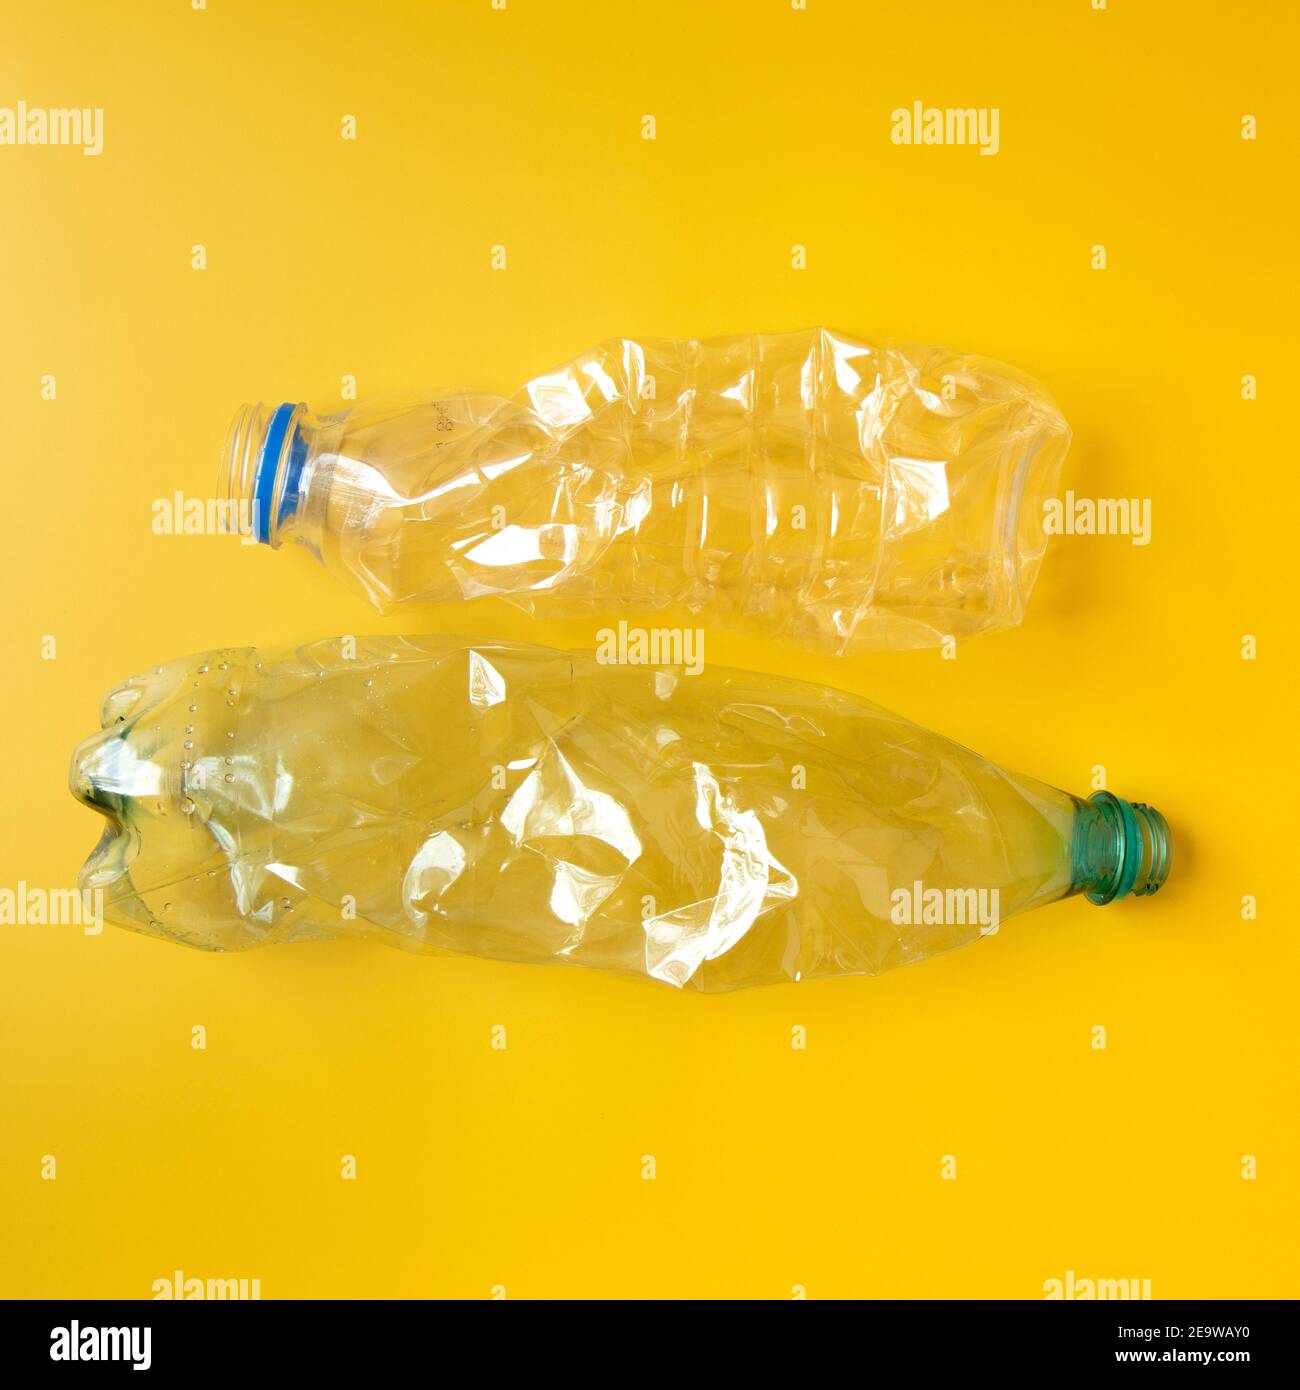 Used plastic bottles on yellow background. Stock Photo